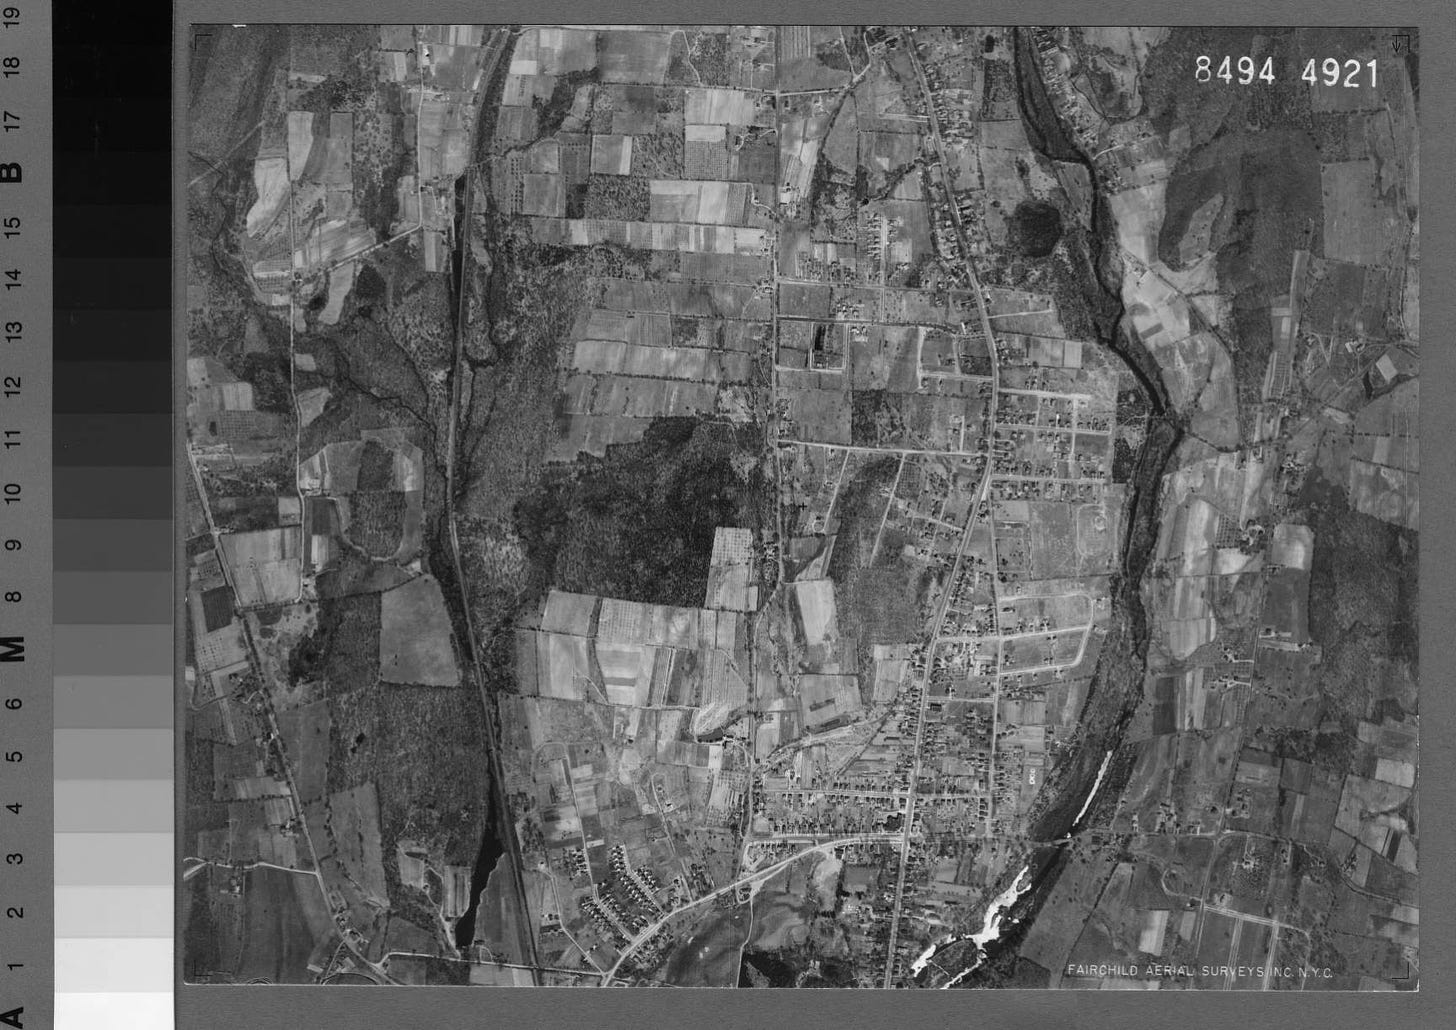 Aerial survey of Connecticut 1934 photograph 04921